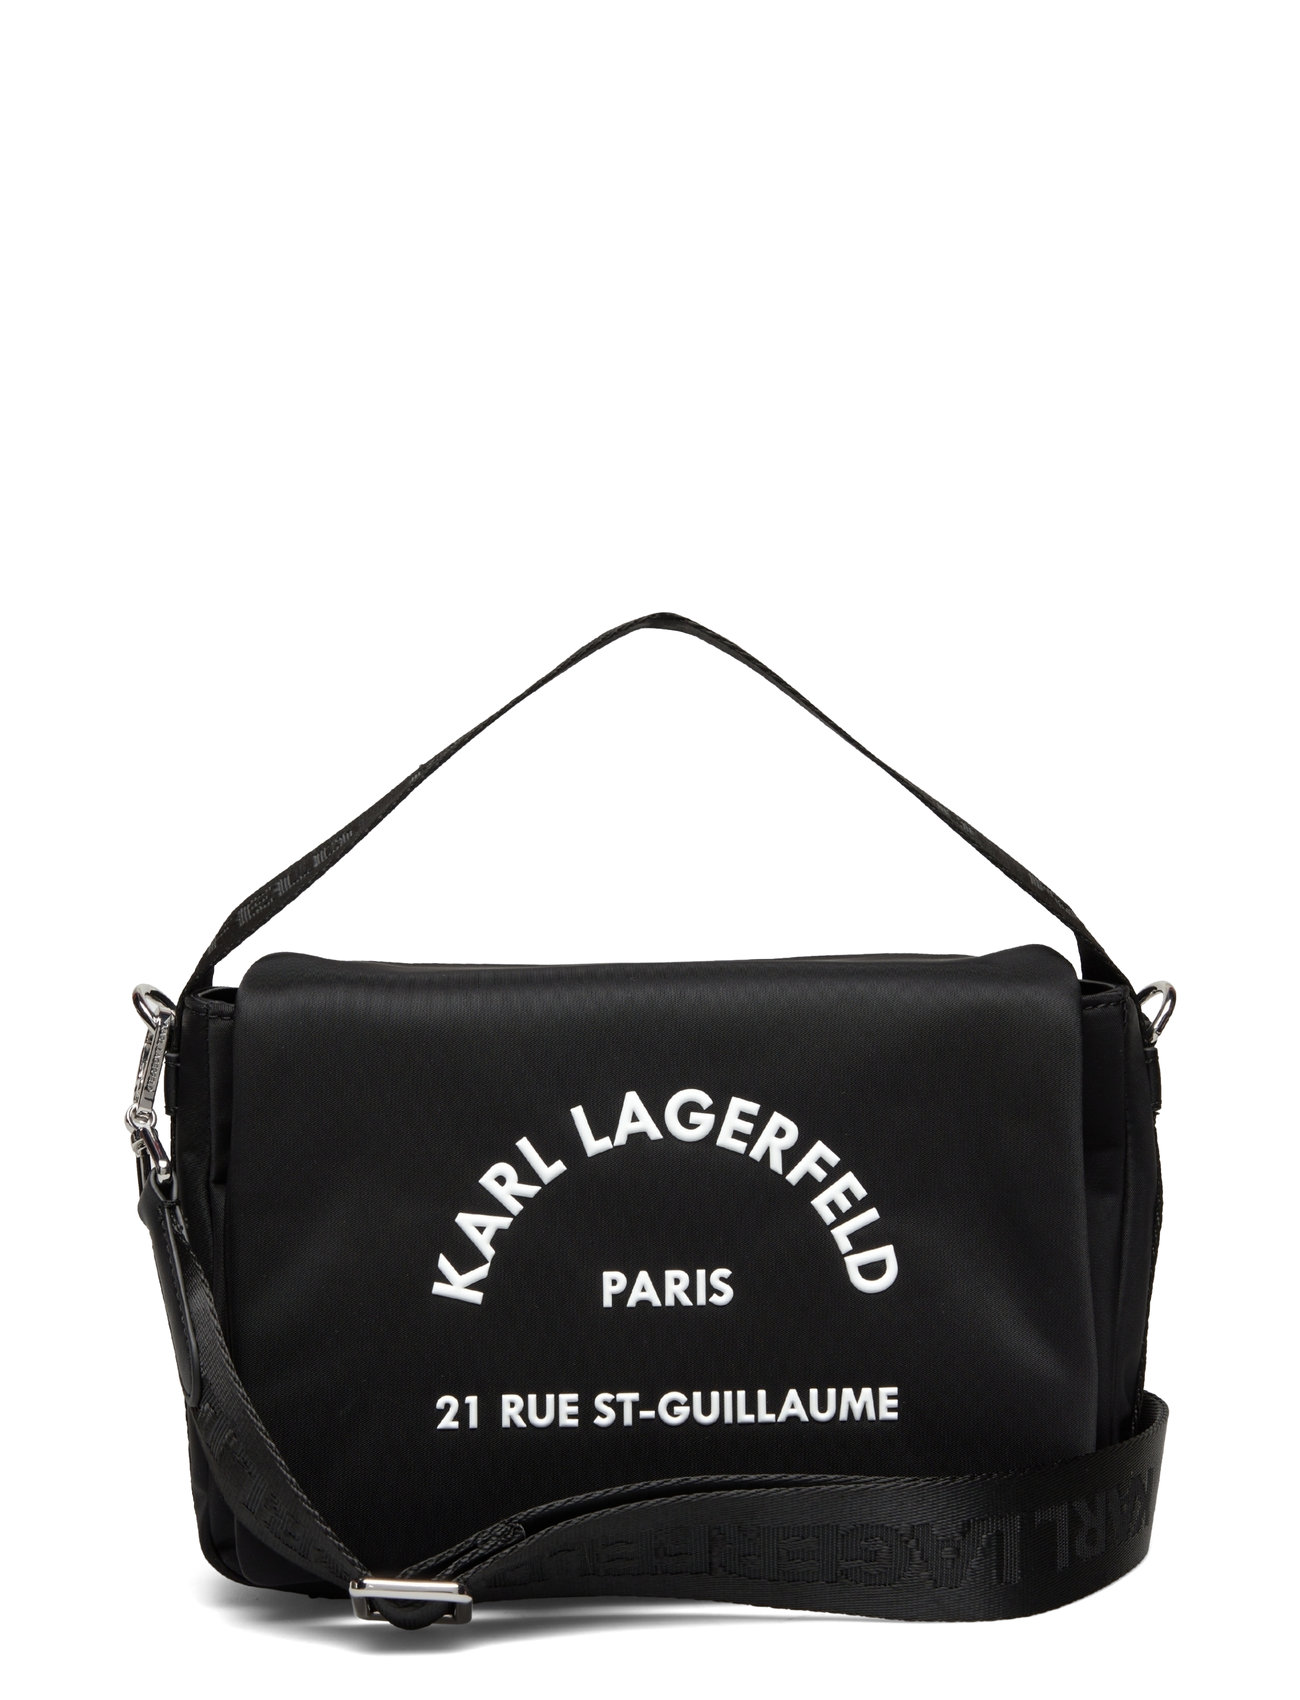 KARL LAGERFELD PARIS Messenger Cross-body Burgundy Red Purse Bag | eBay